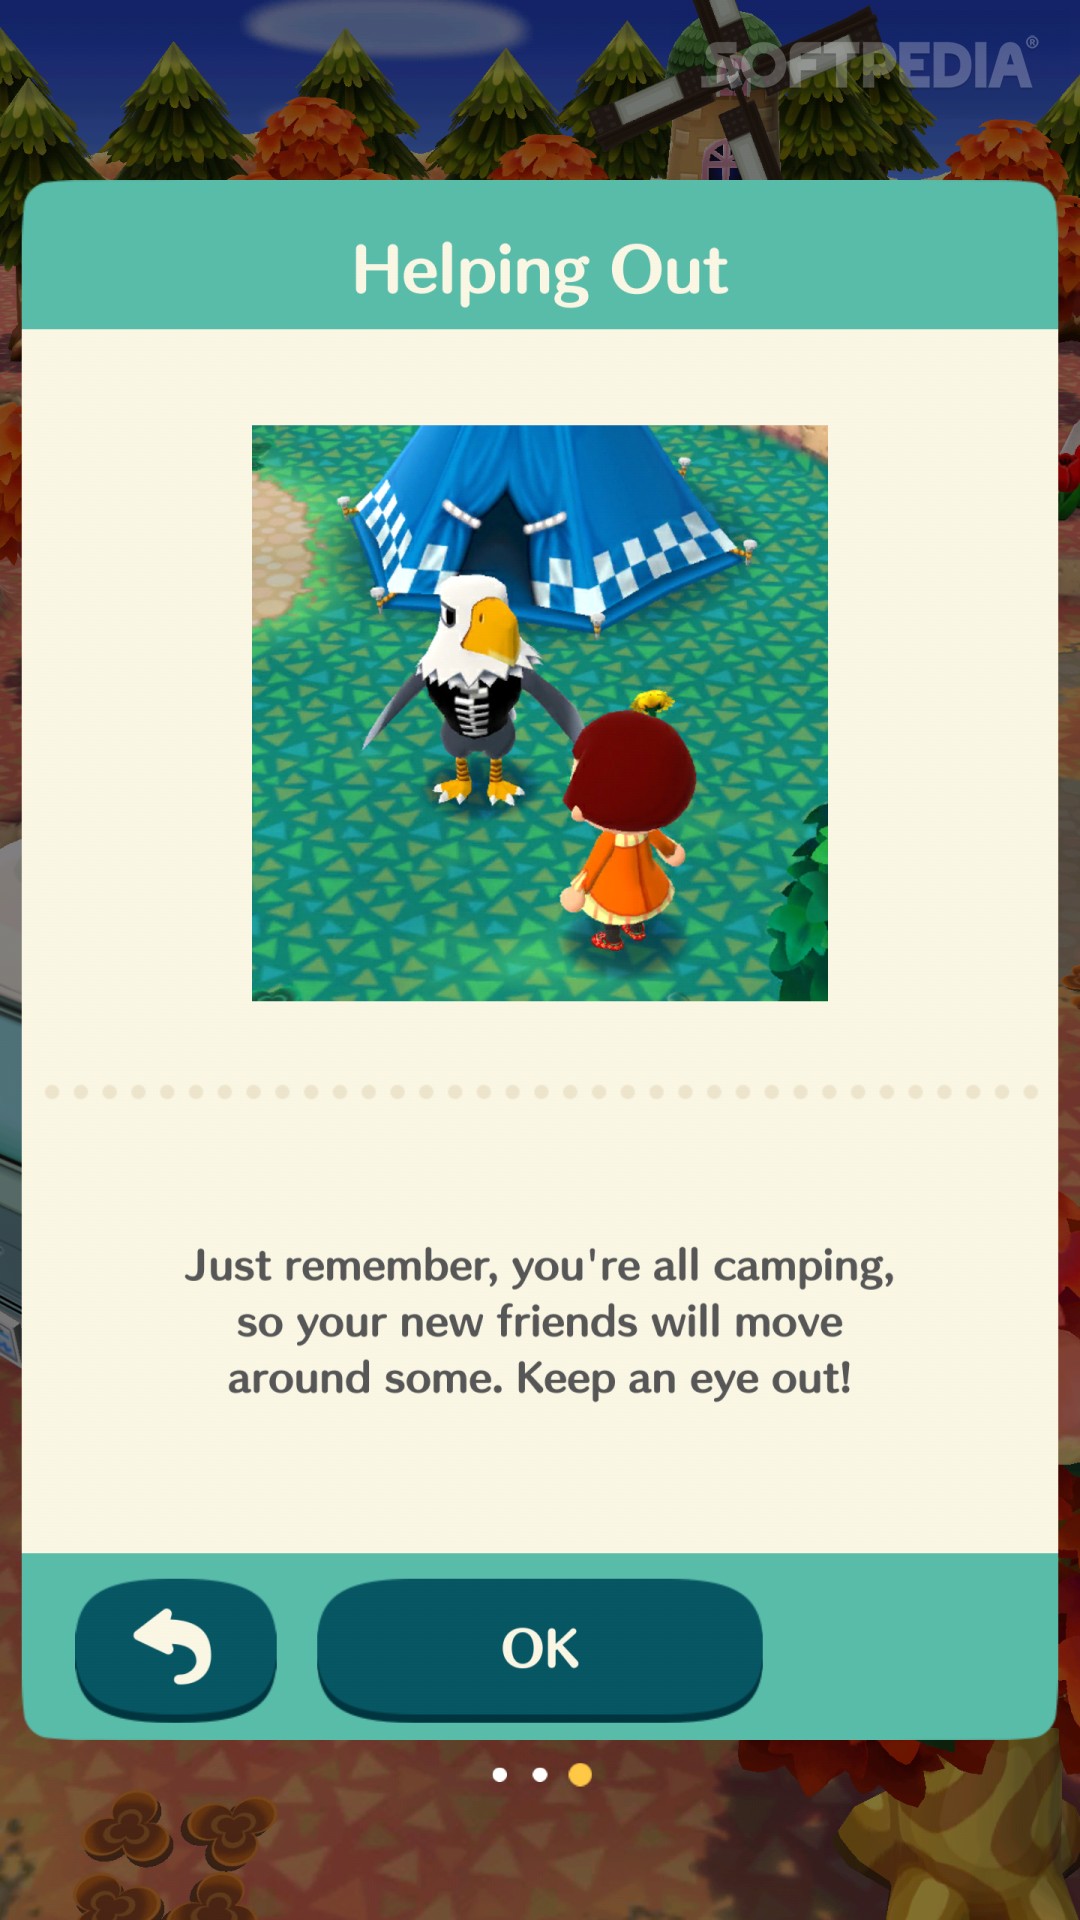 Animal Crossing Pocket Camp 4 3 0 Apk Download